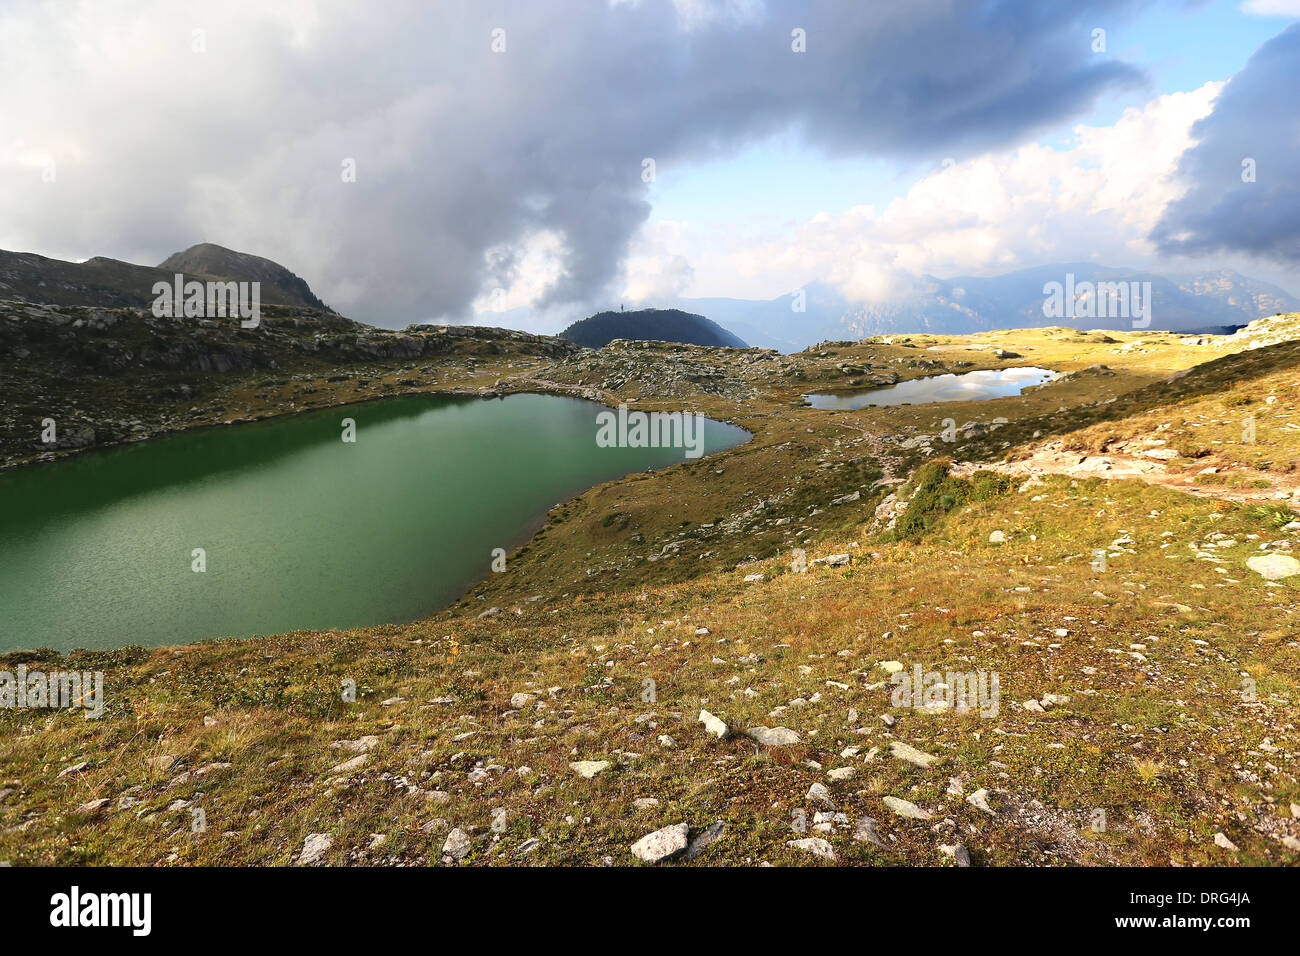 Bombasel lakes. The Lagorai mountain group. The Fiemme Valley, Trentino. Mountain landscape. Italian Alps. Europe. Stock Photo